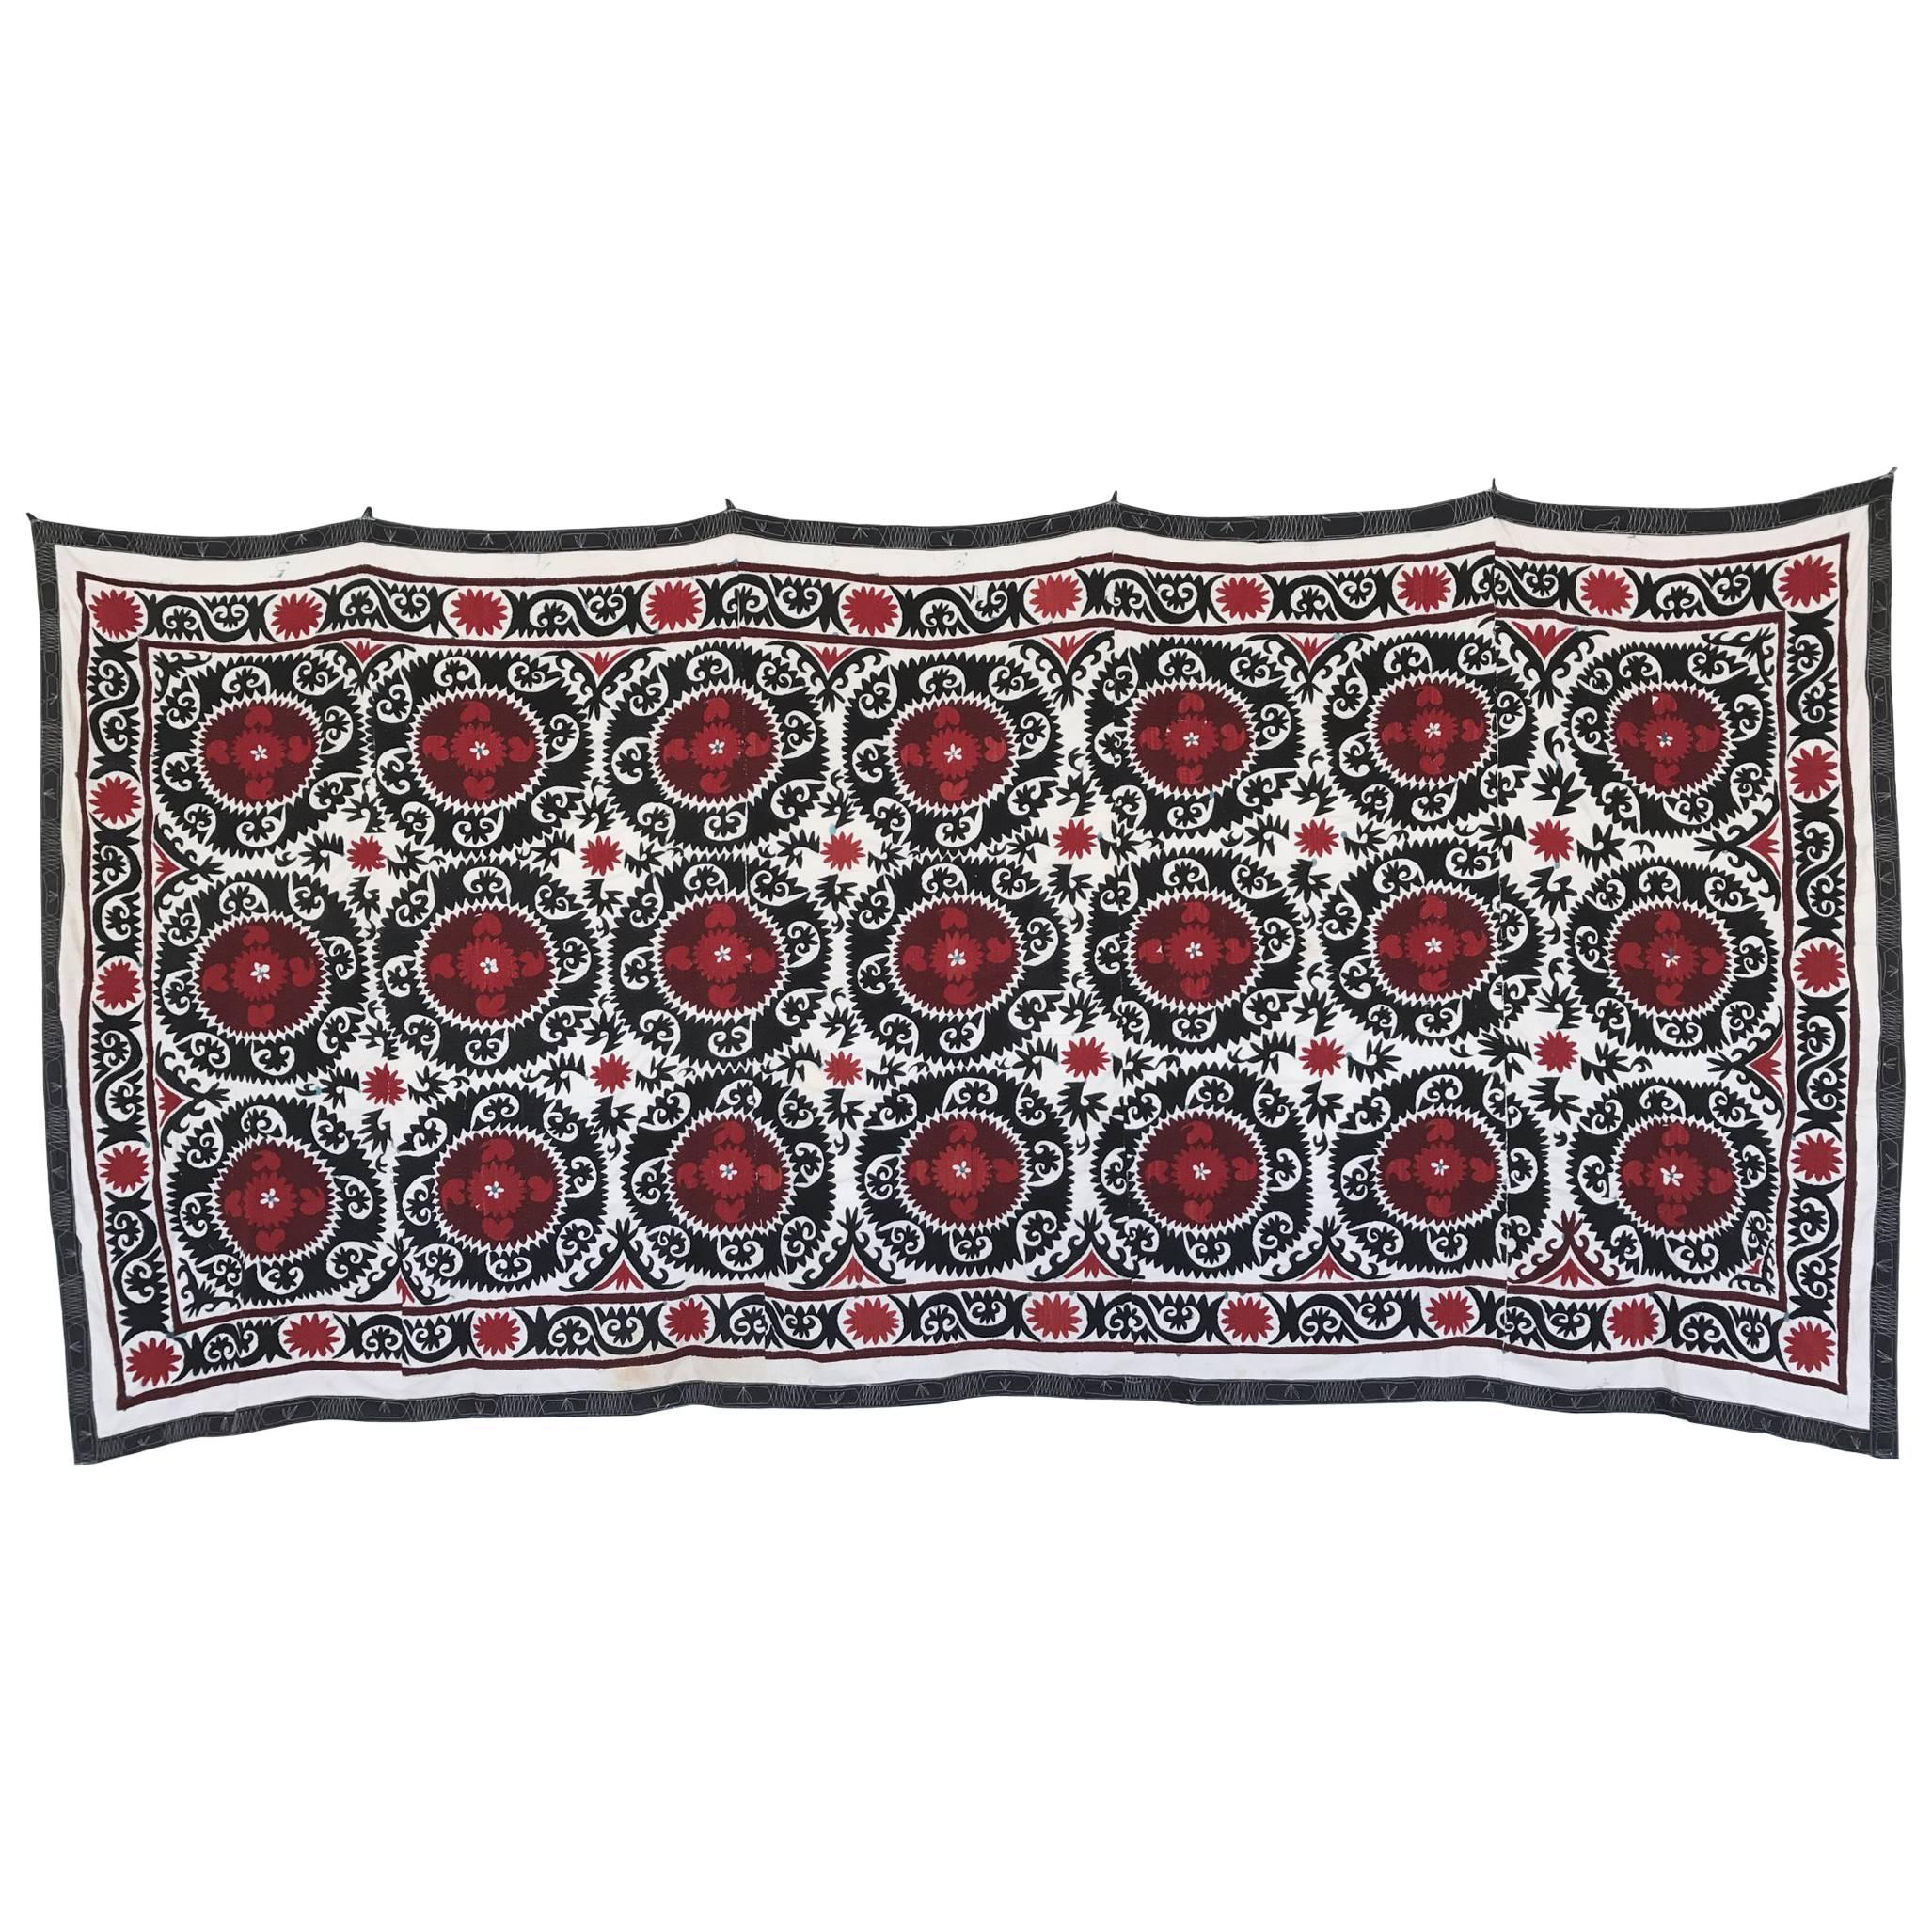 Monumental Vintage Uzbek Suzani Blanket or Tapestry